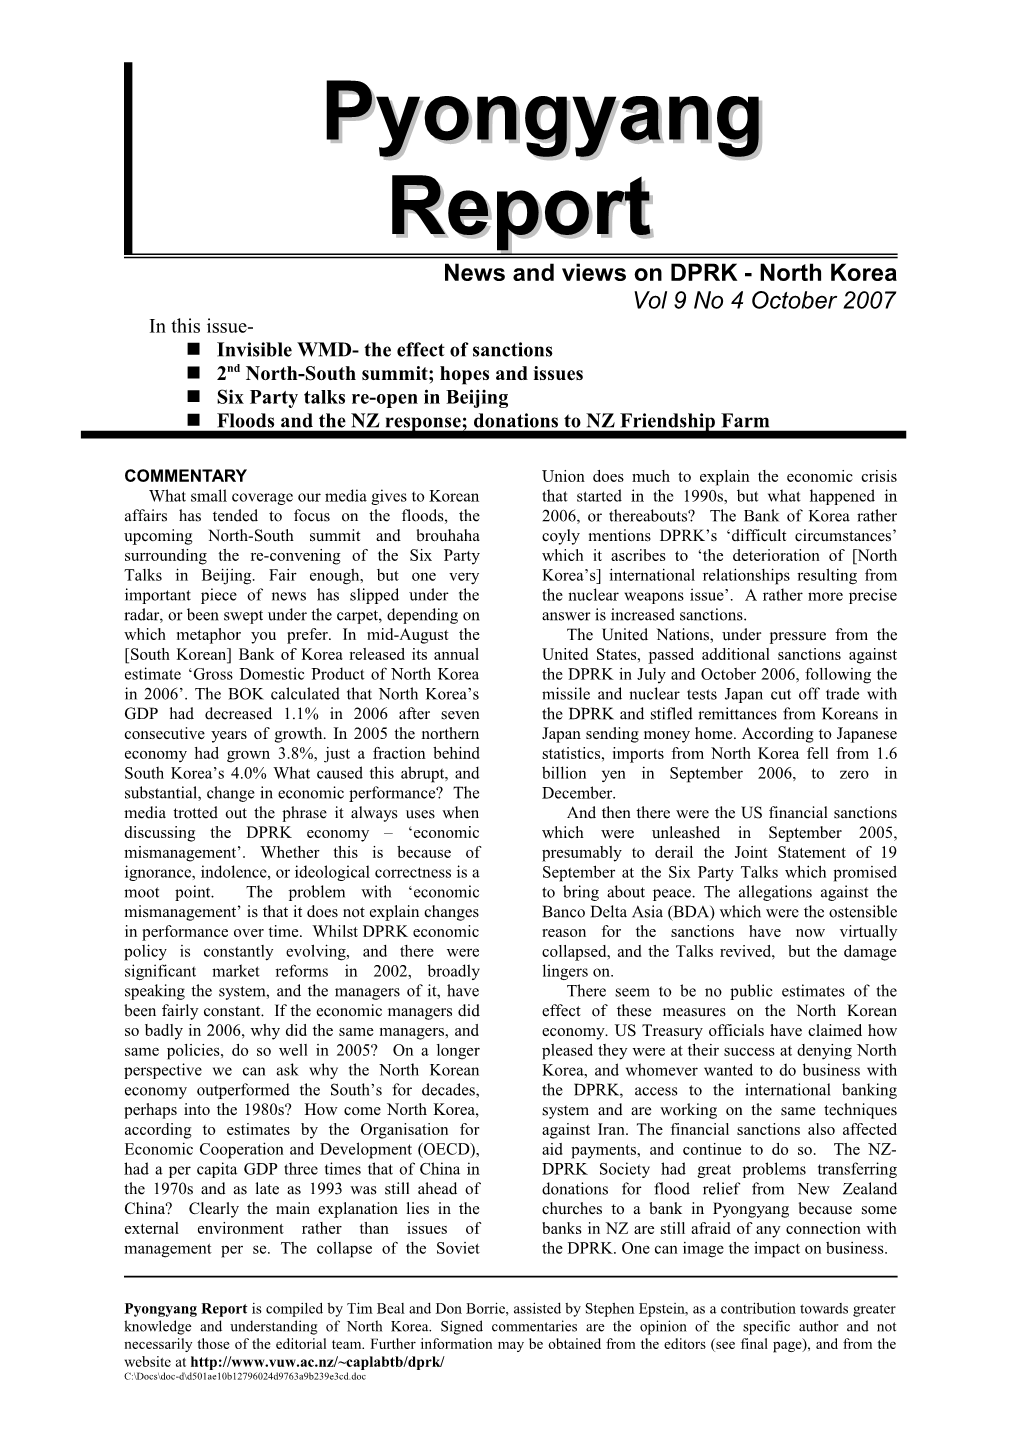 Pyongyang Report Vol 9 No 4, October 2007